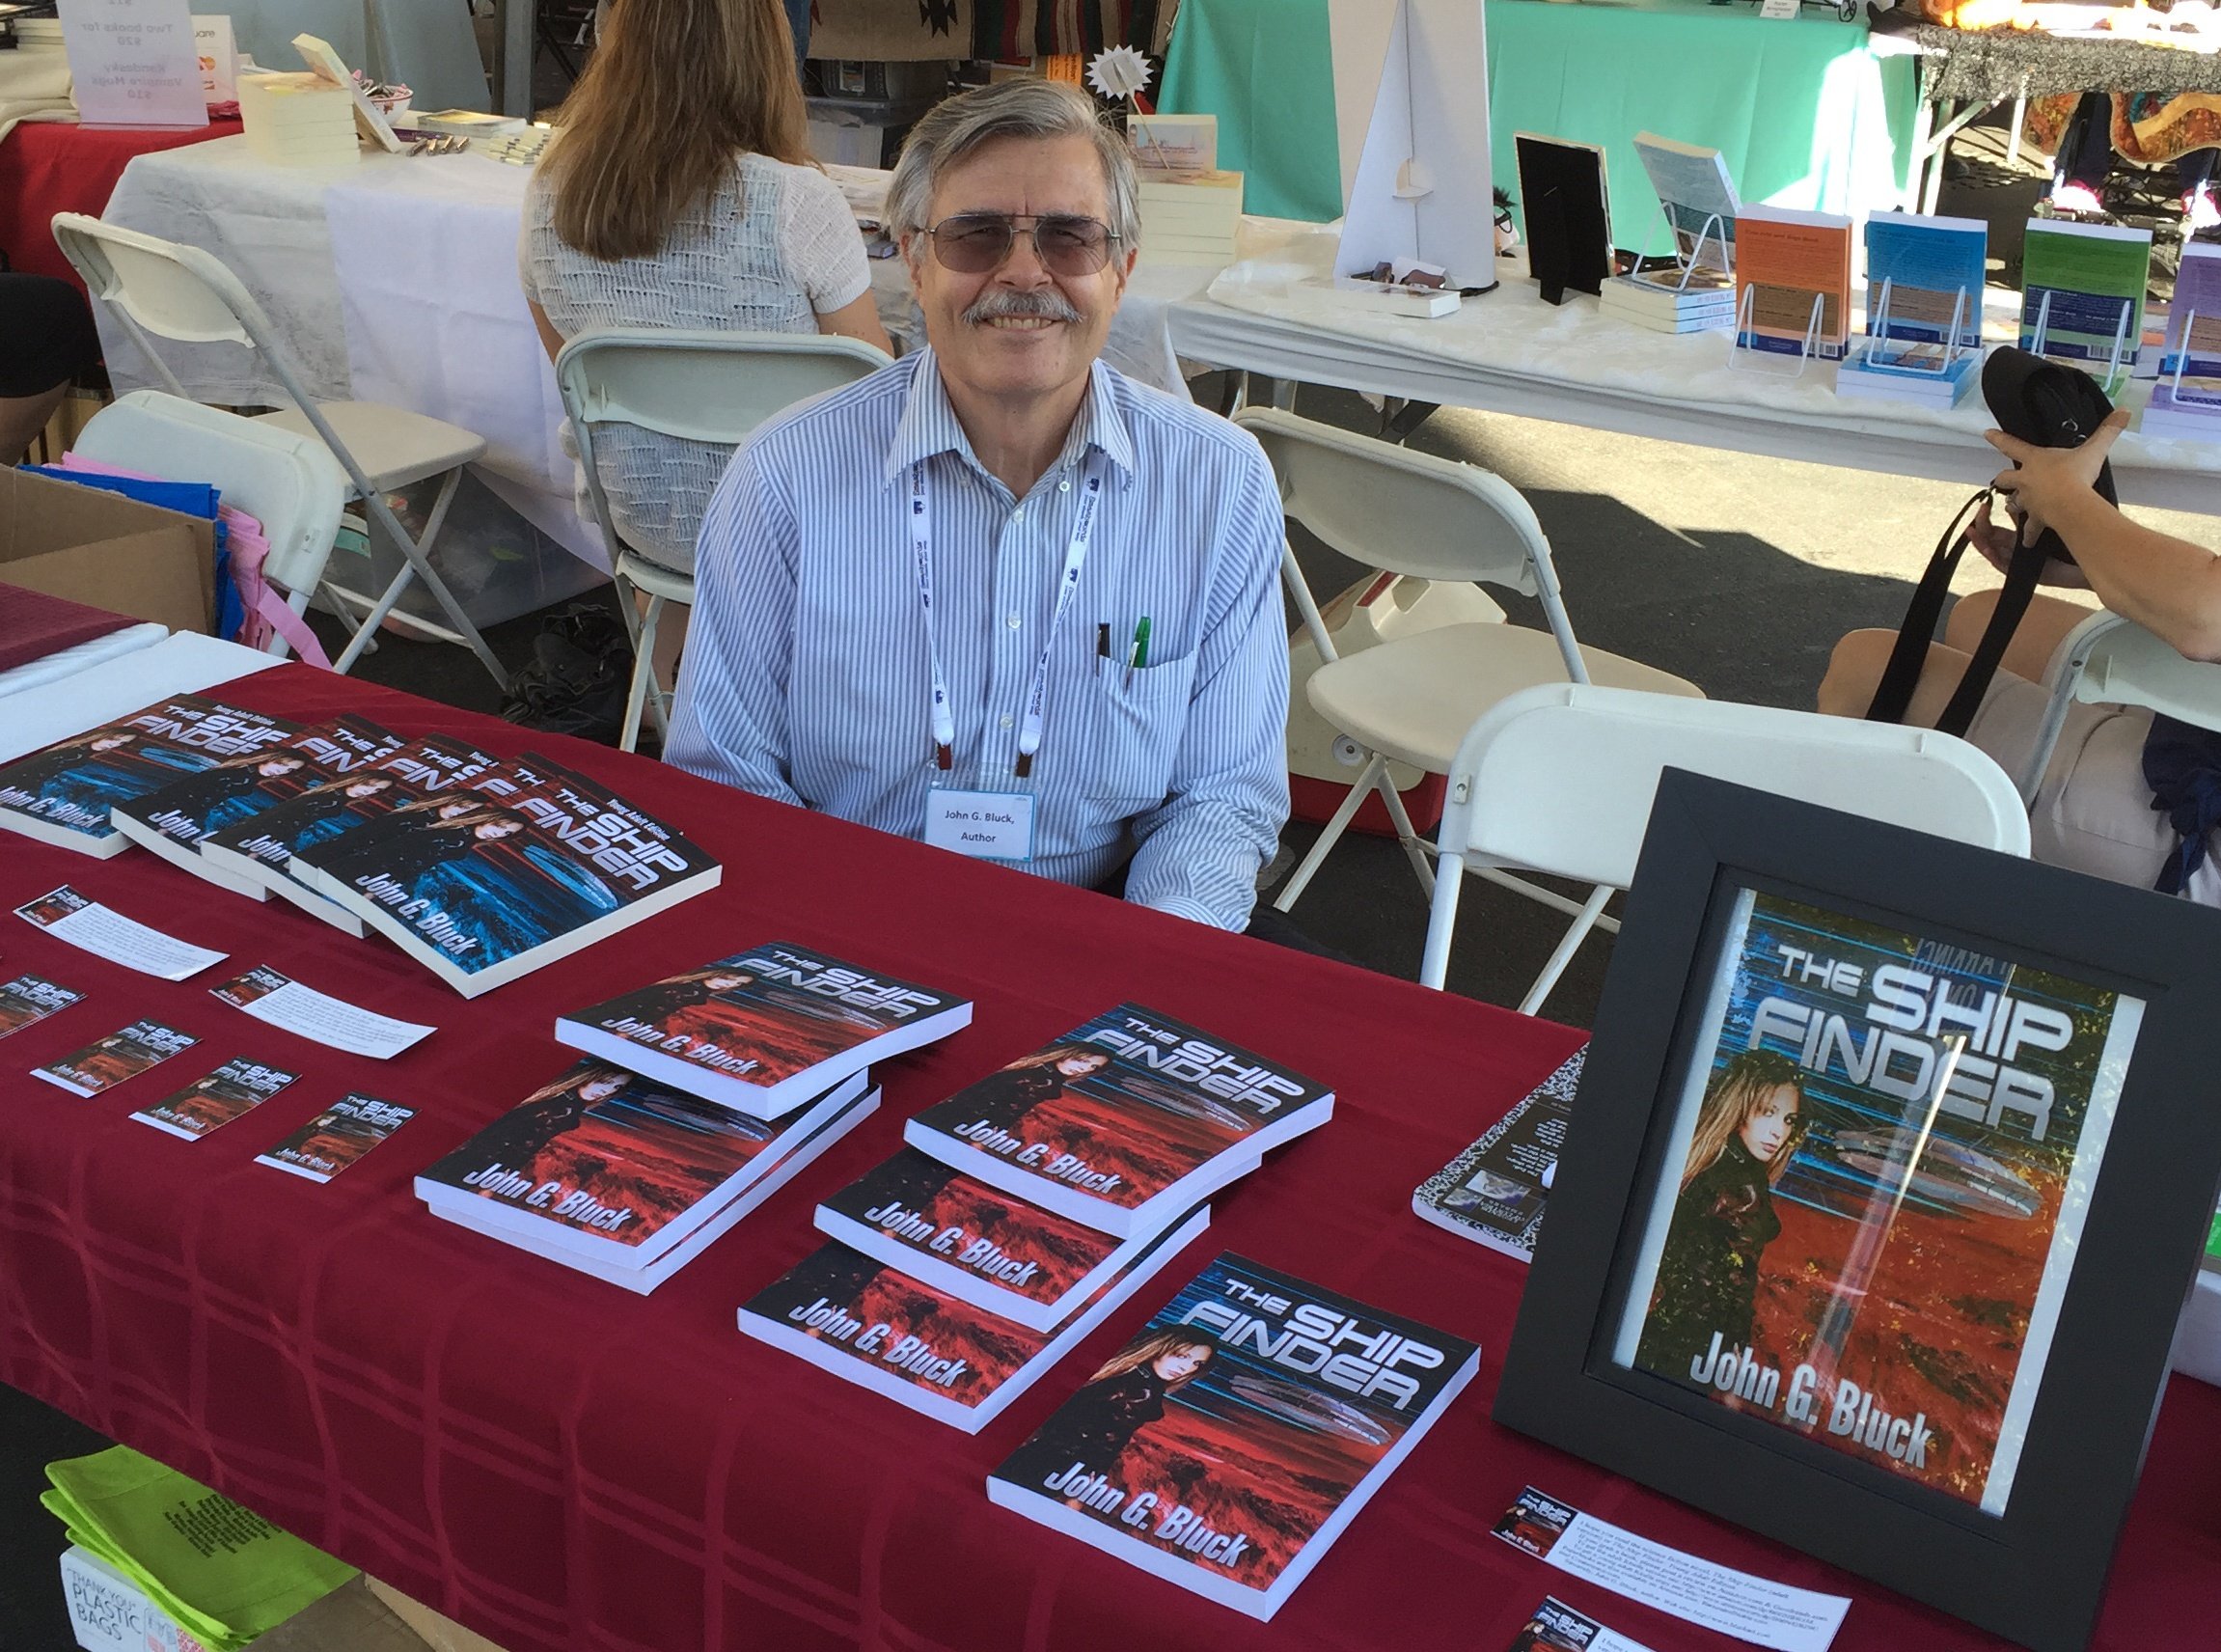 Author John G. Bluck at Manteca, Calif. Bookfest on Oct. 11, 2015.